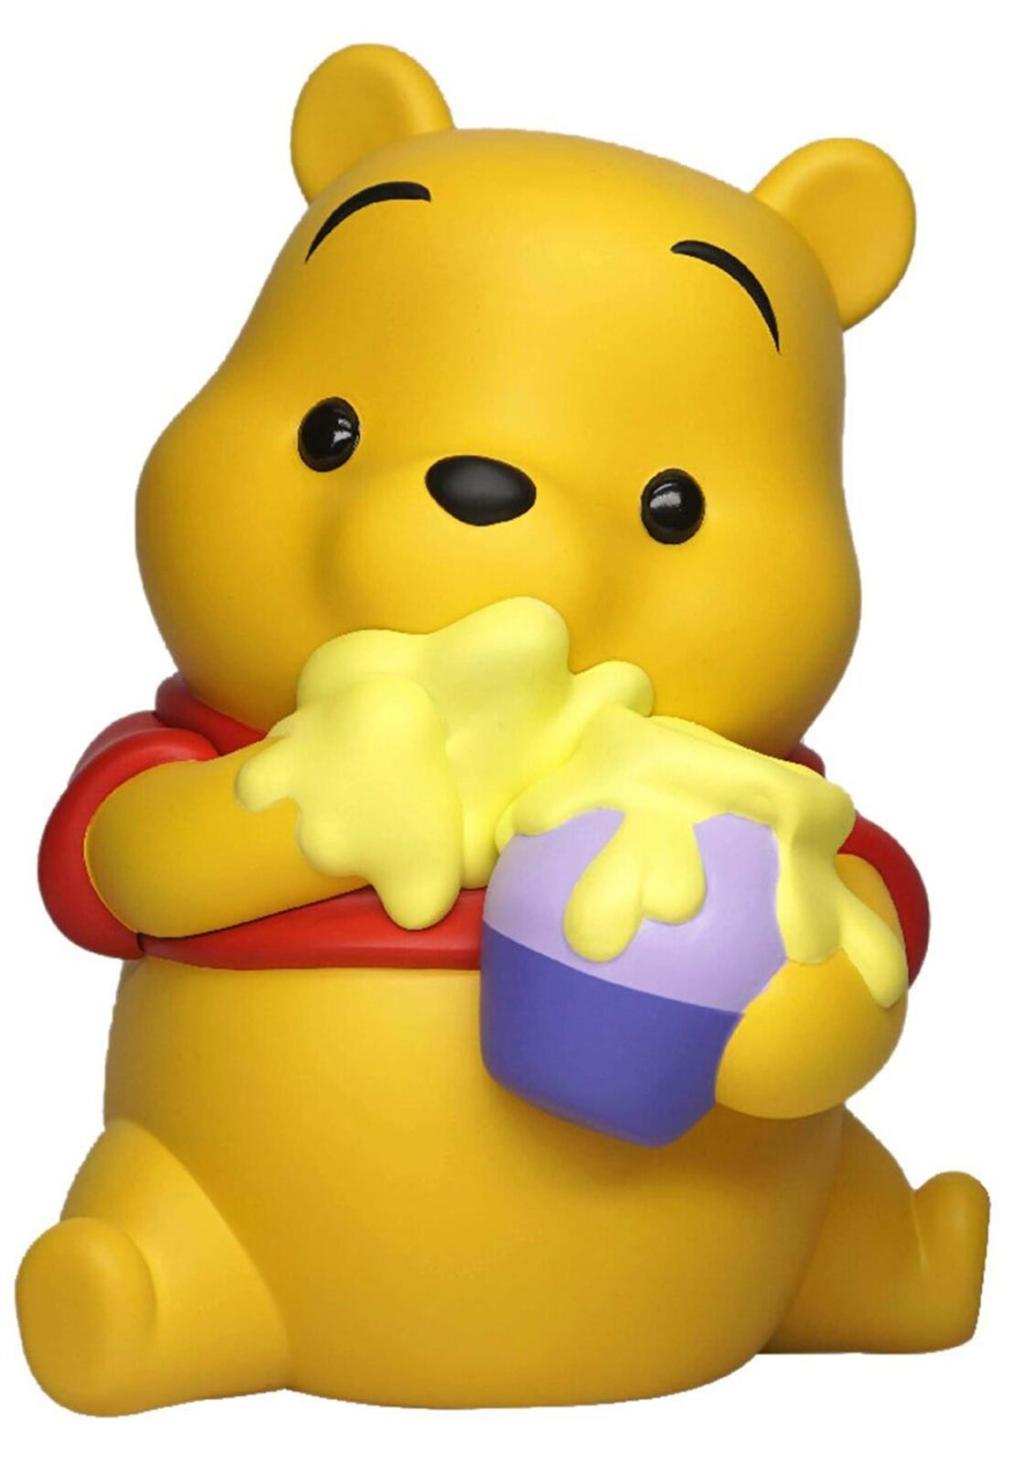 DISNEY - Figural Bank - Pooh with honey pot - 20cm